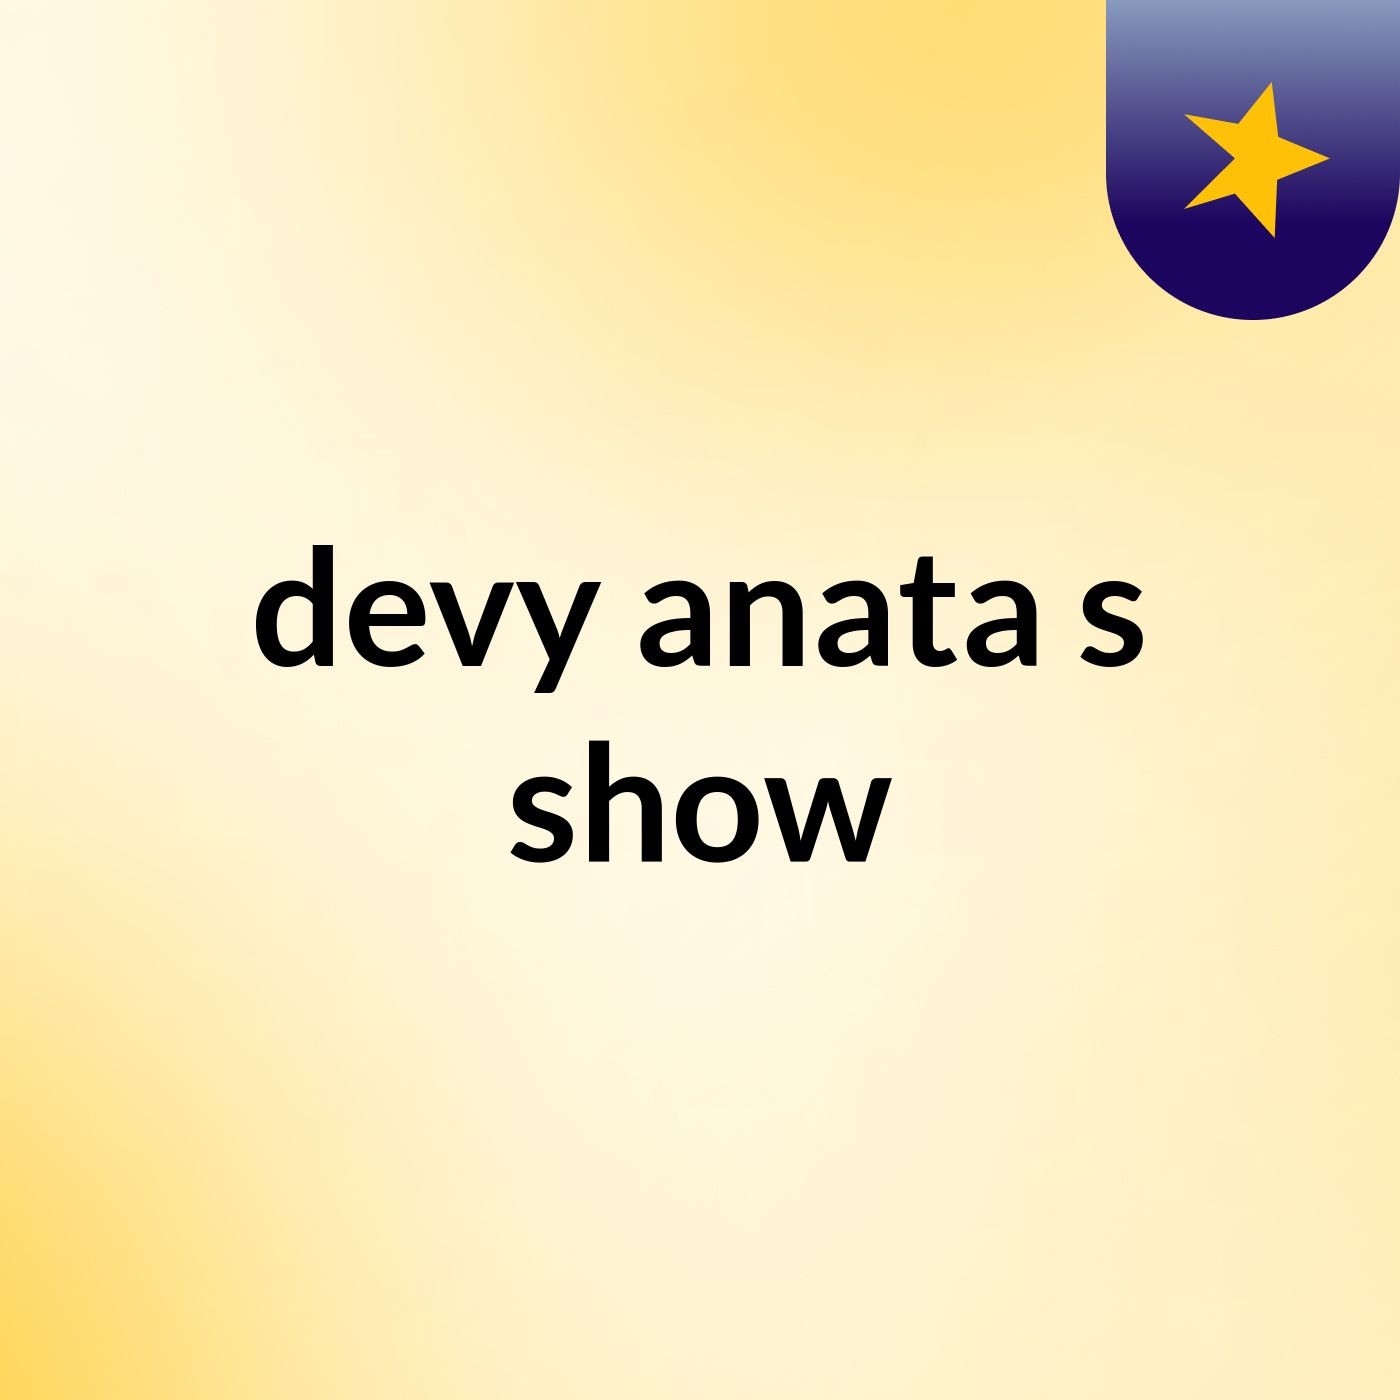 devy anata's show